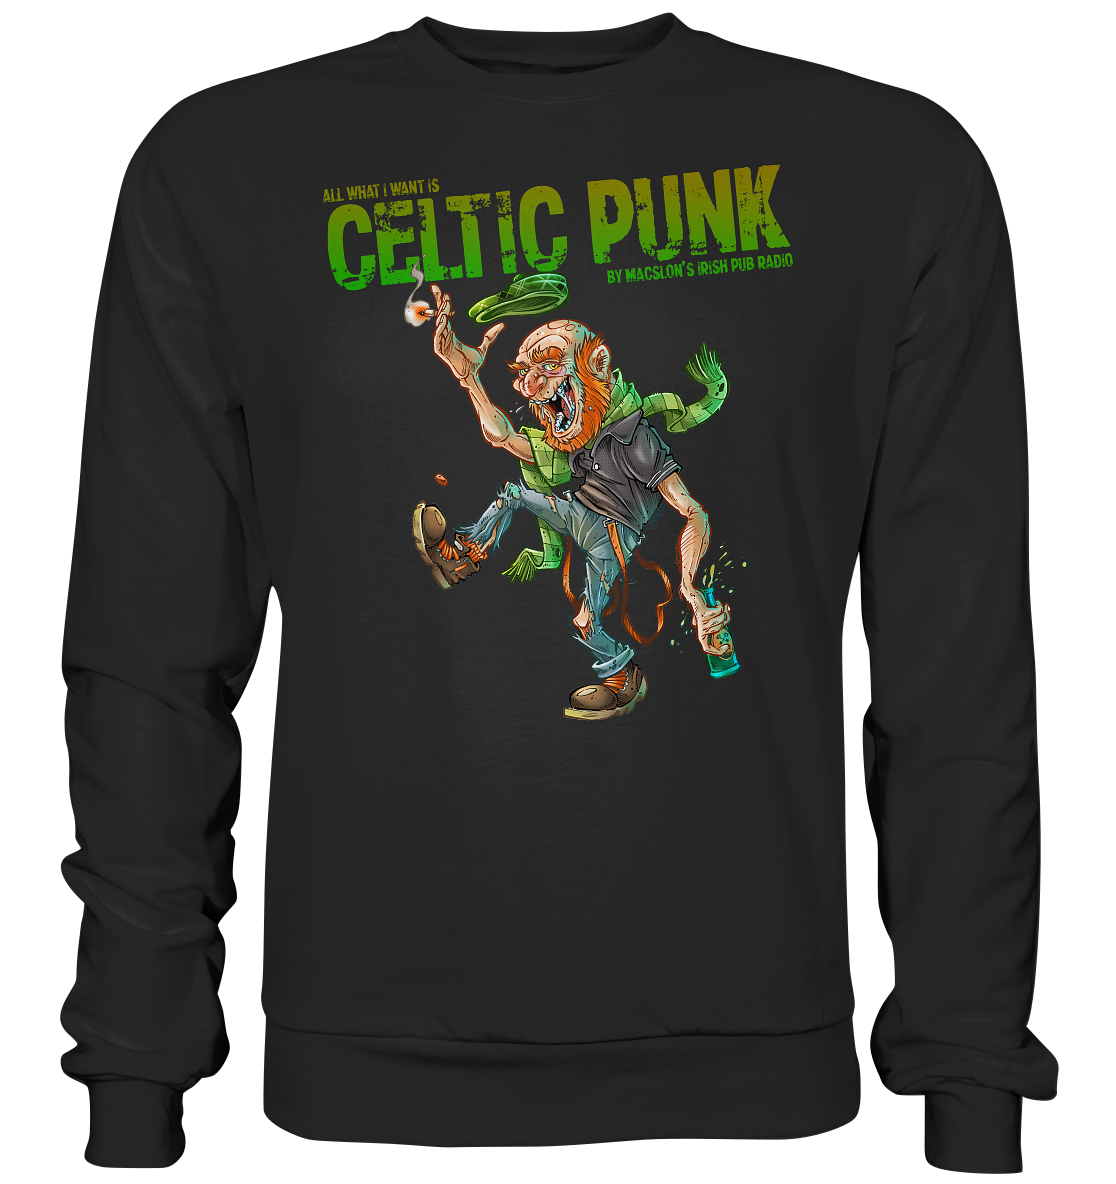 "All I Want Is Celtic Punk - Bastard" - Premium Sweatshirt